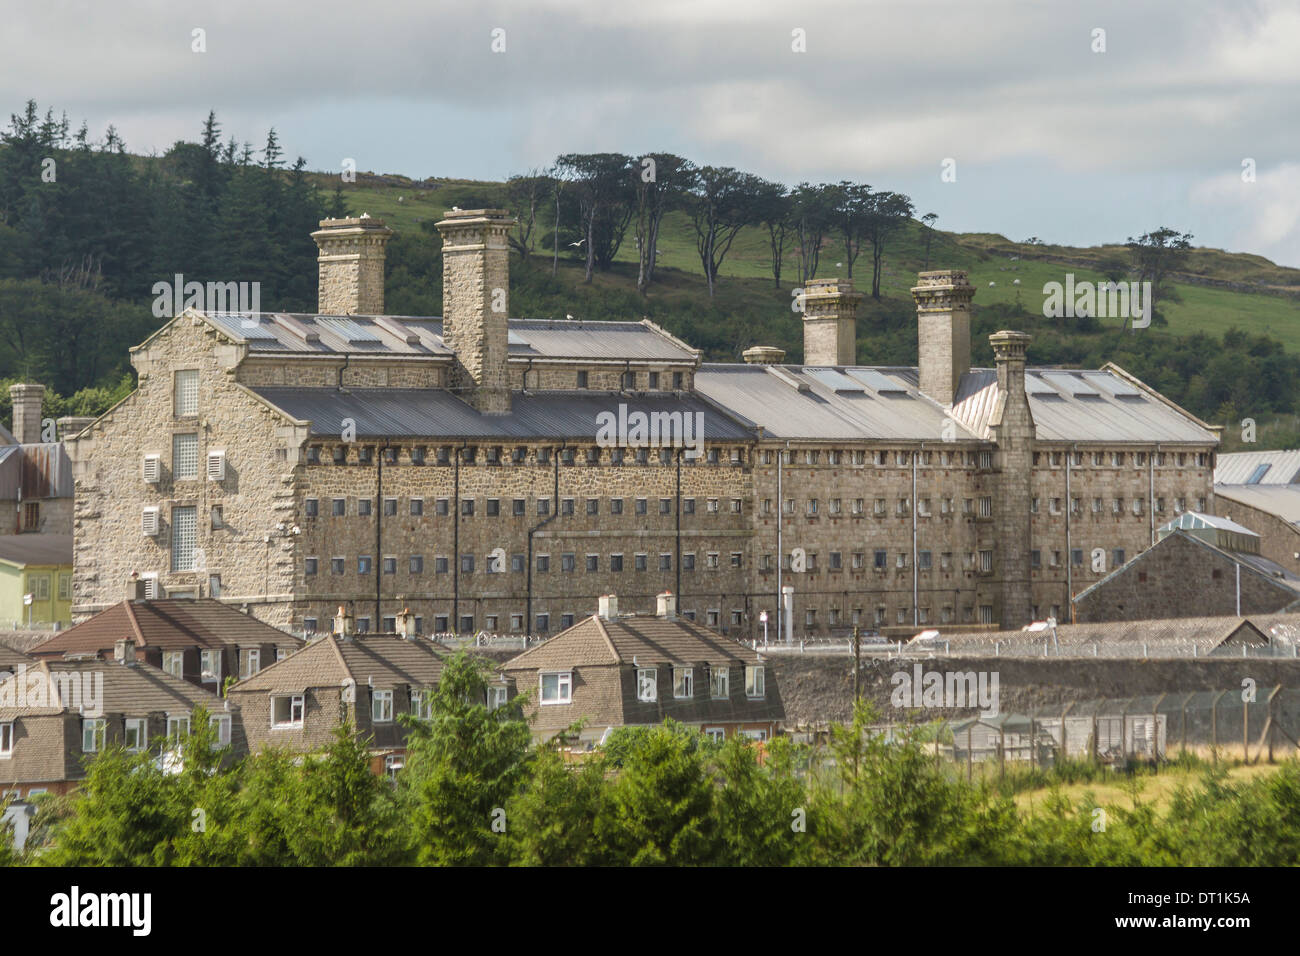 La prison de Dartmoor. Devon, Angleterre, Royaume-Uni, Europe Banque D'Images